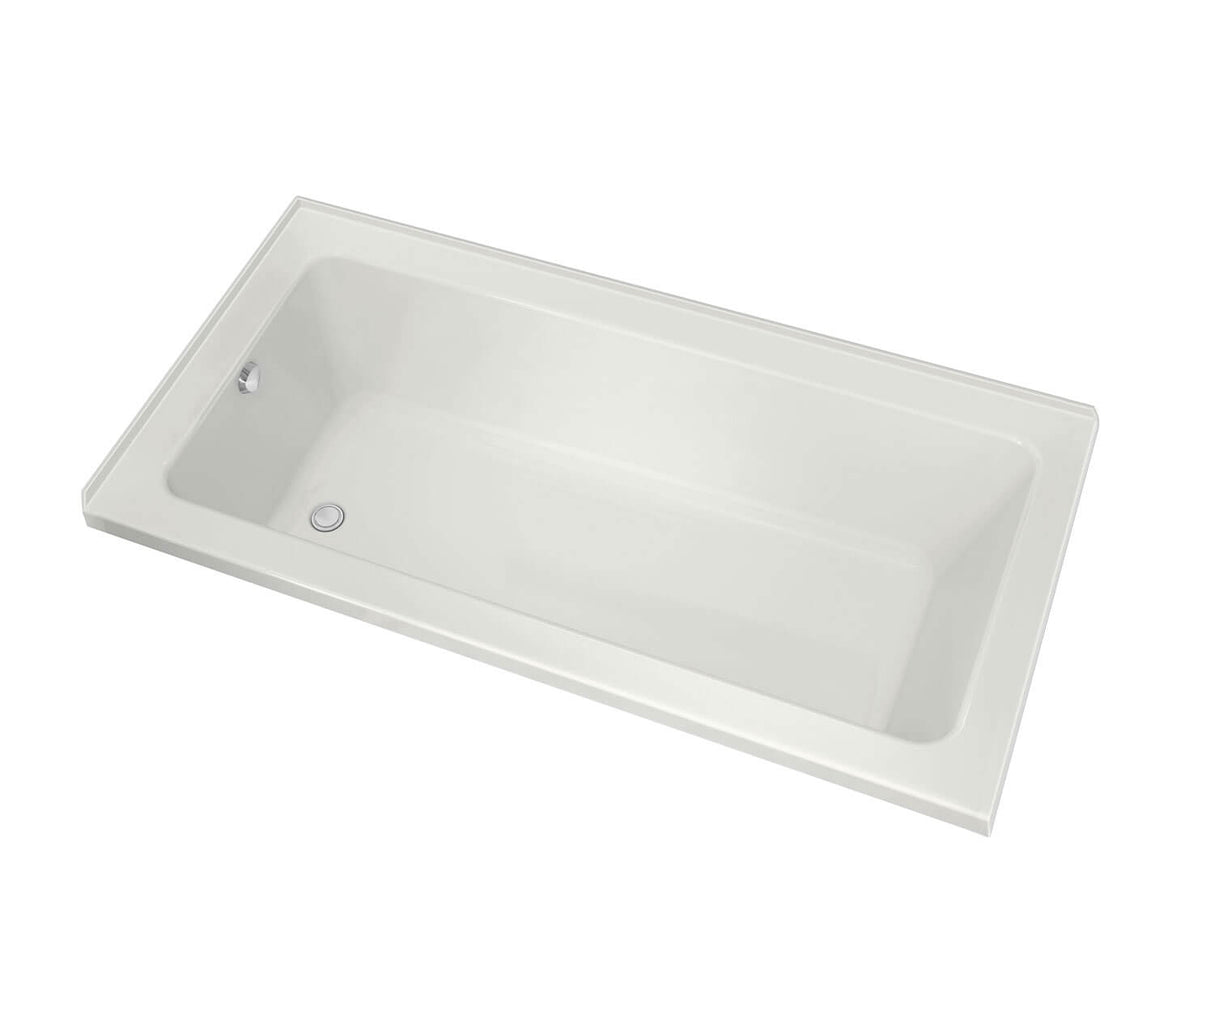 MAAX 106211-000-001-106 Pose 7236 IF Acrylic Corner Left Right-Hand Drain Bathtub in White